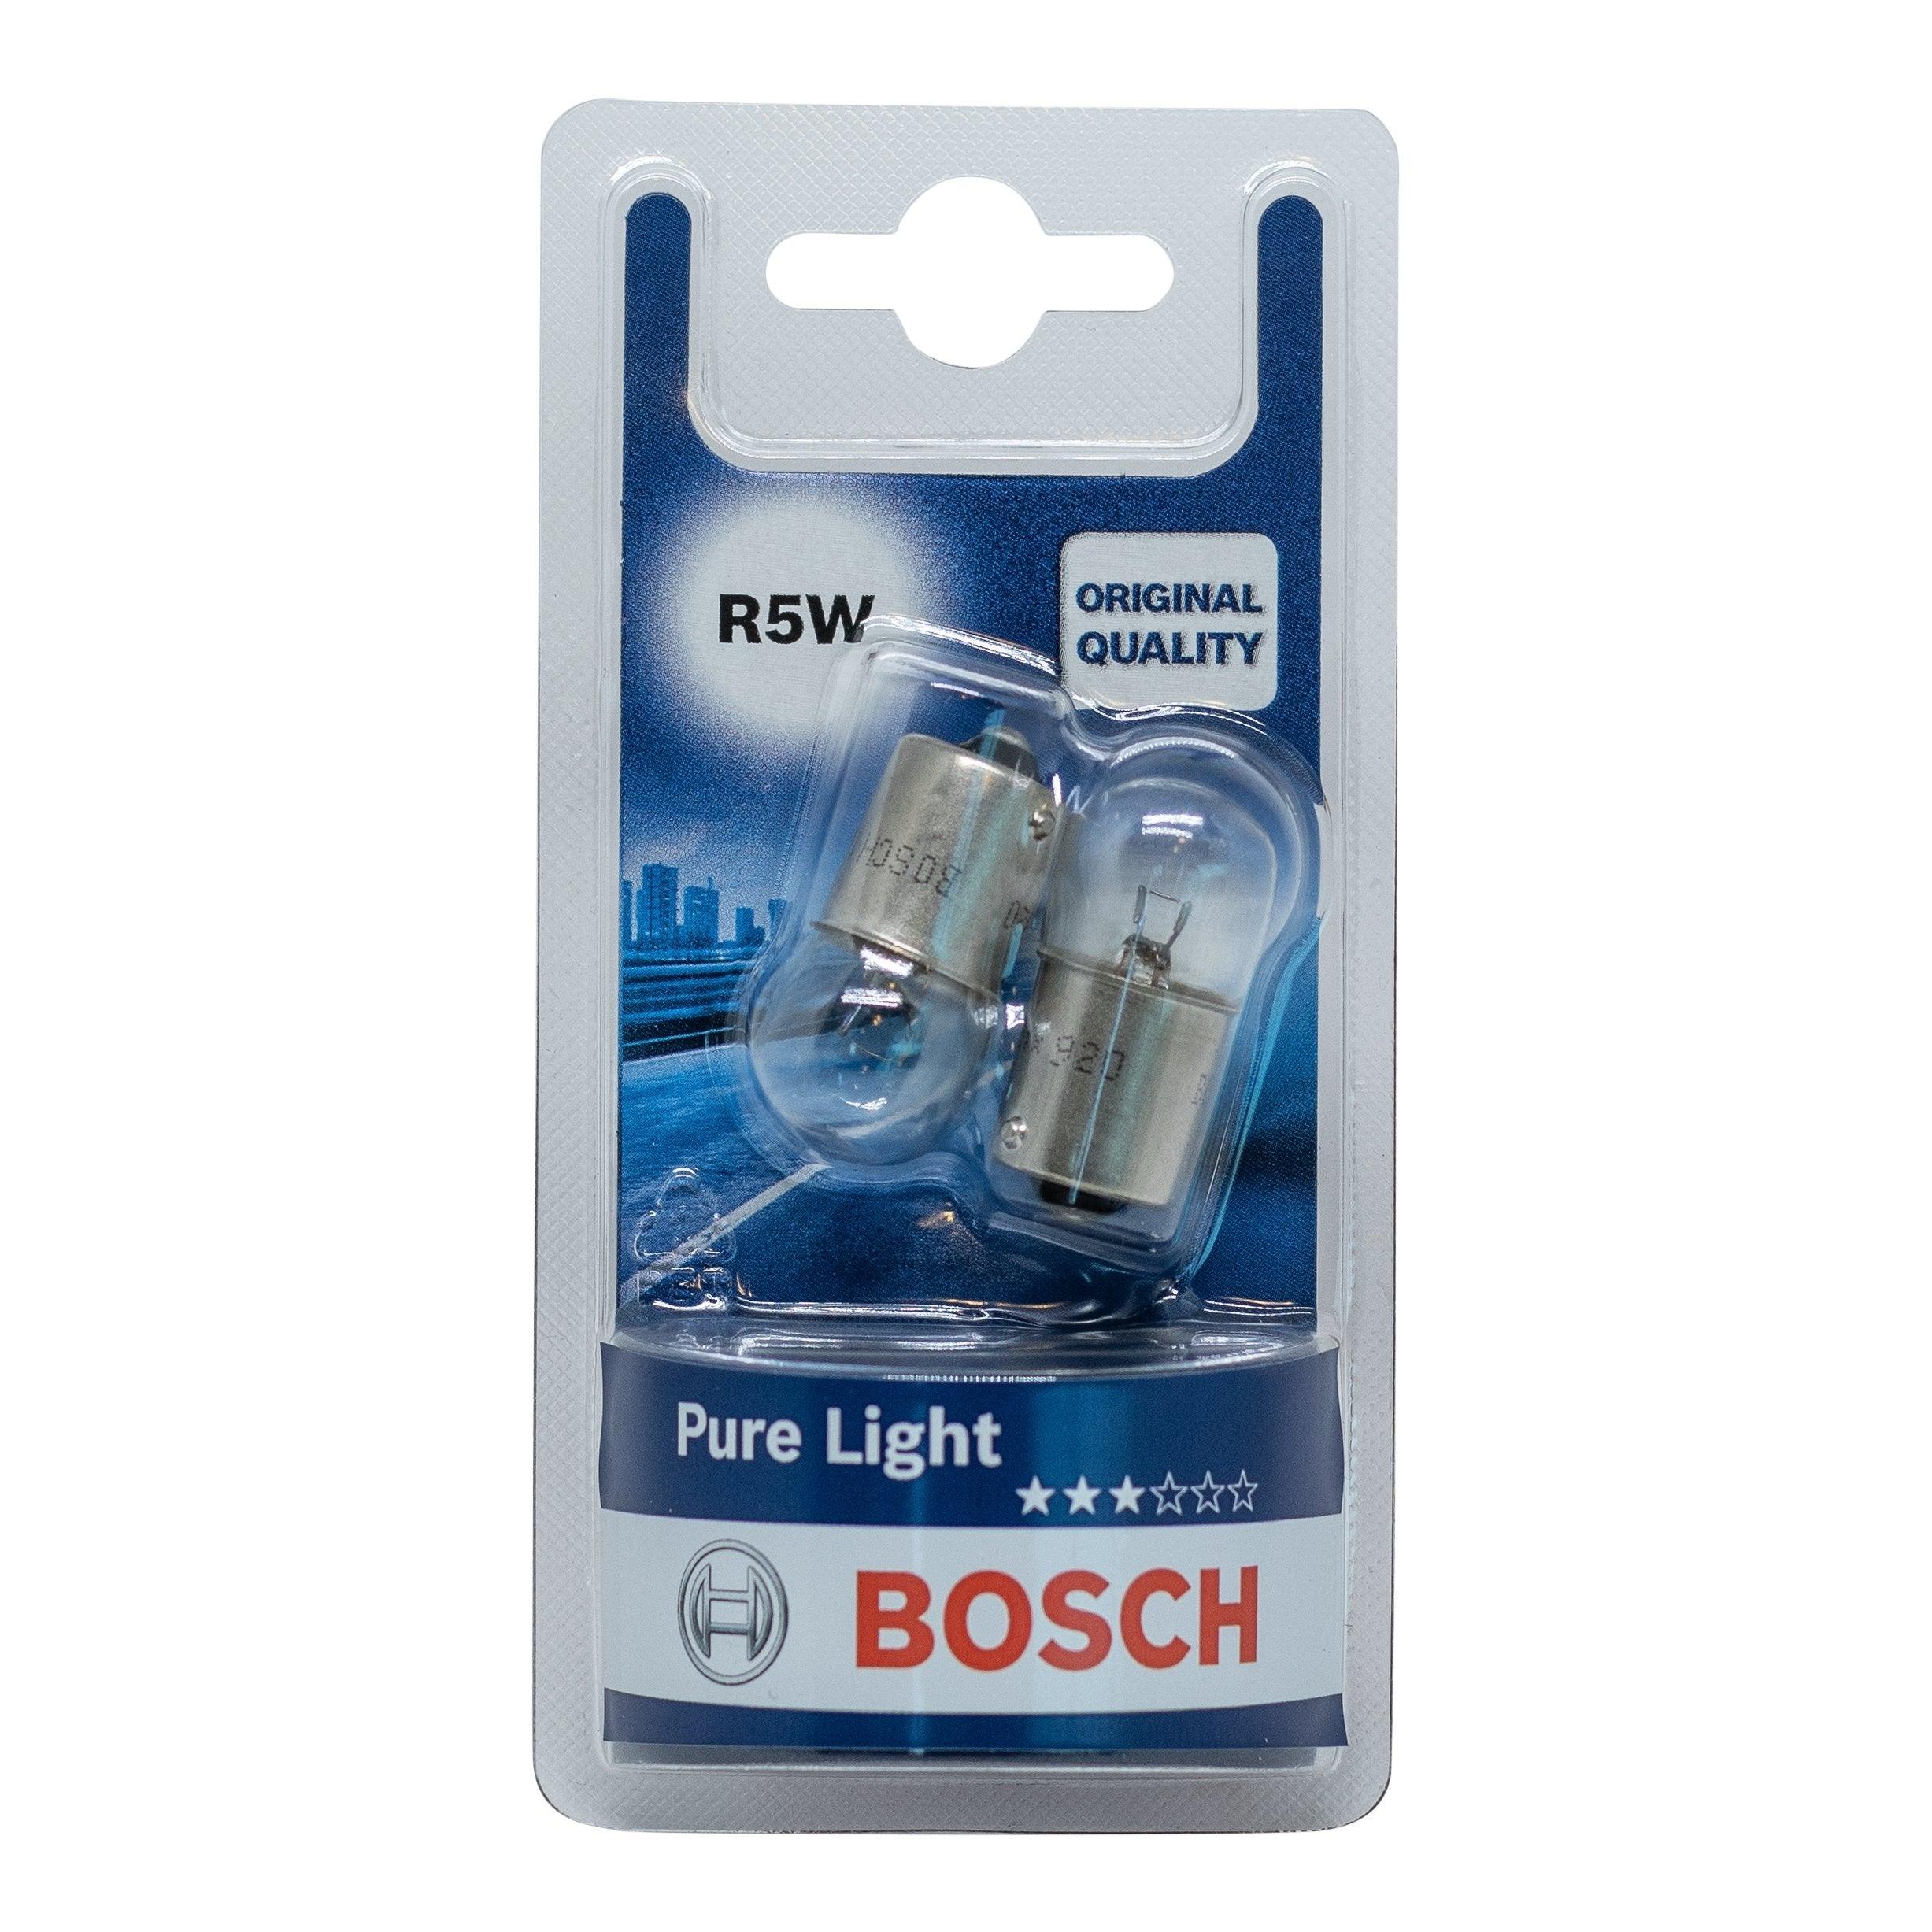 Bosch Pure Light R5W thumbnail